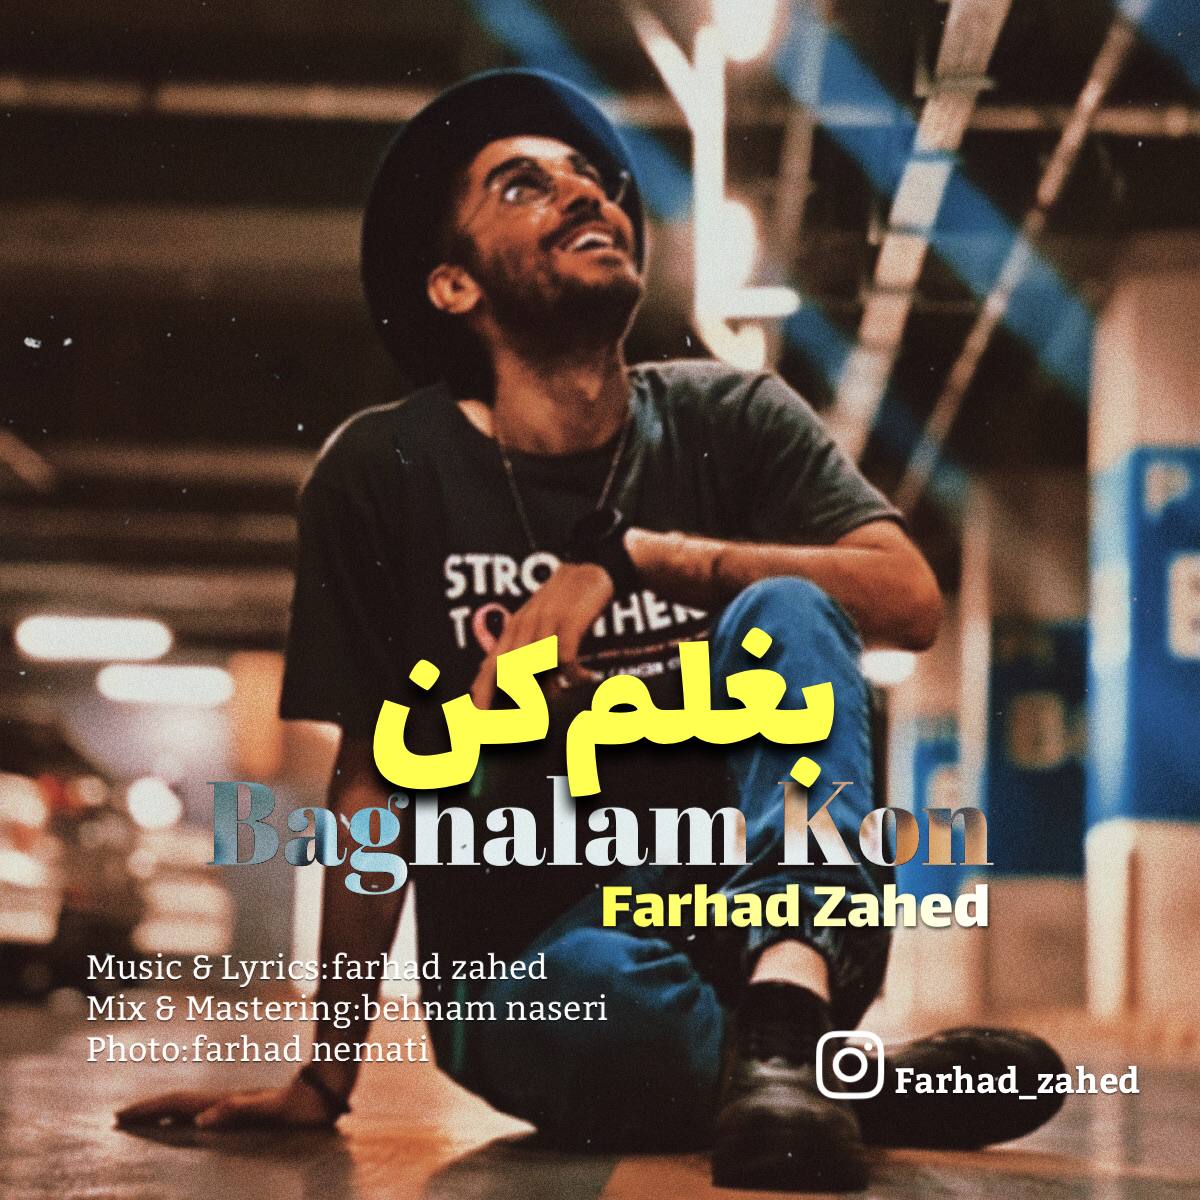 Farhad Zahed – Baghalam Kon